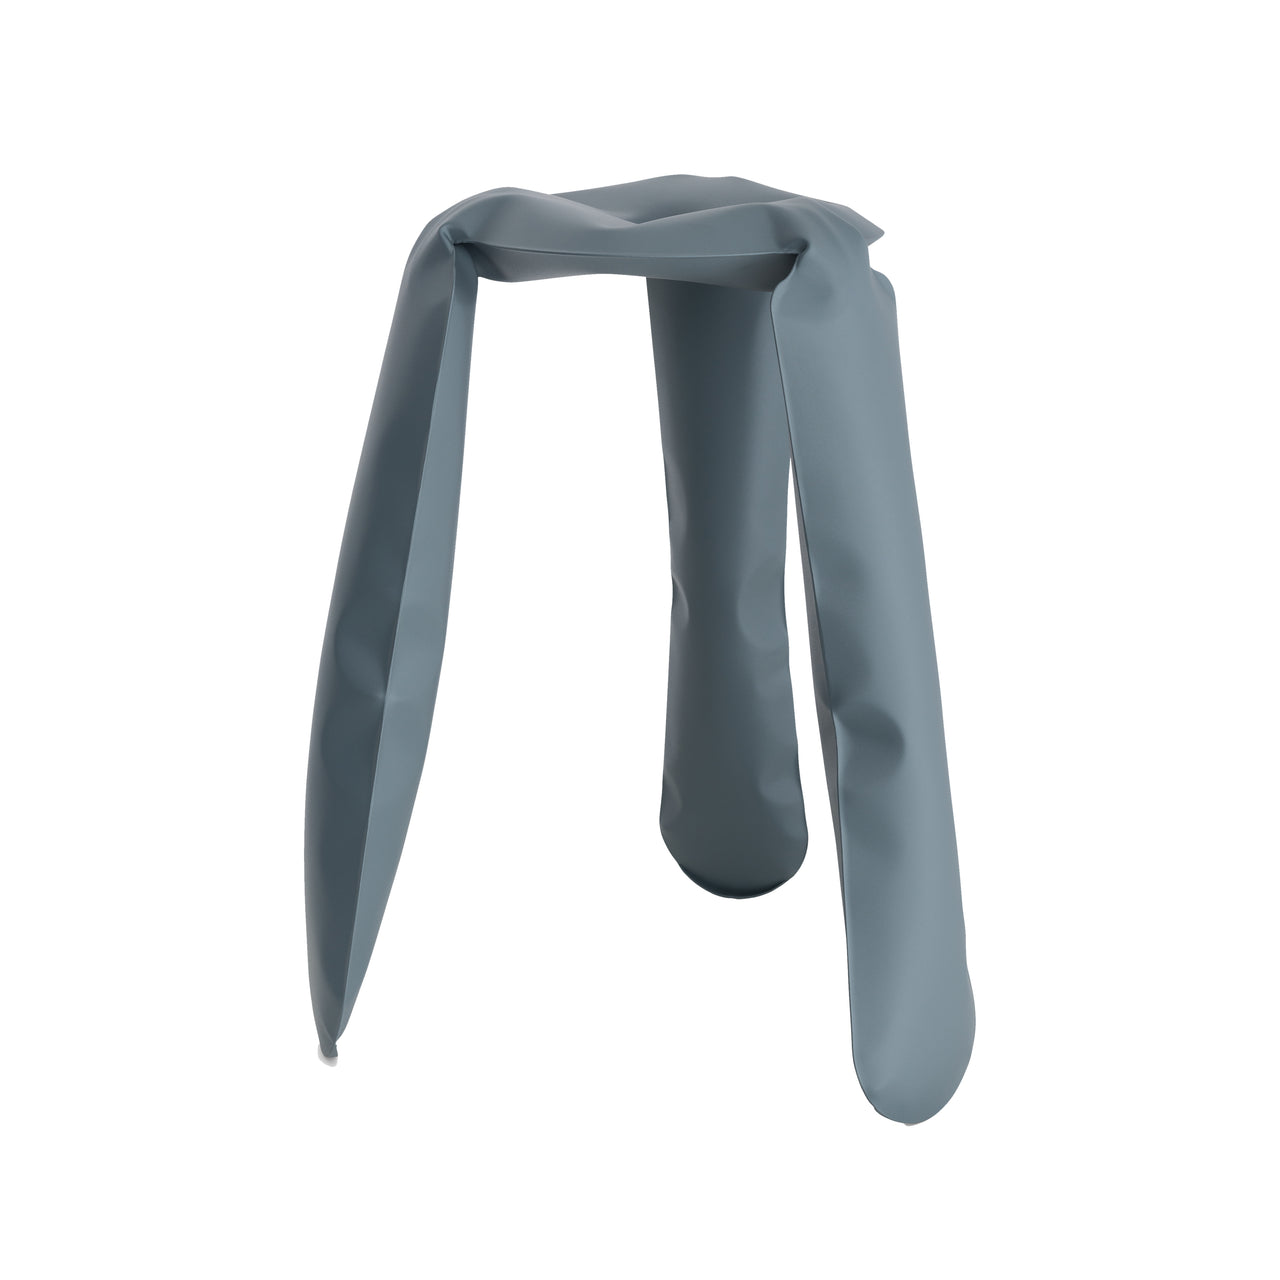 Plopp Kitchen Stool: Blue Grey + Carbon Steel